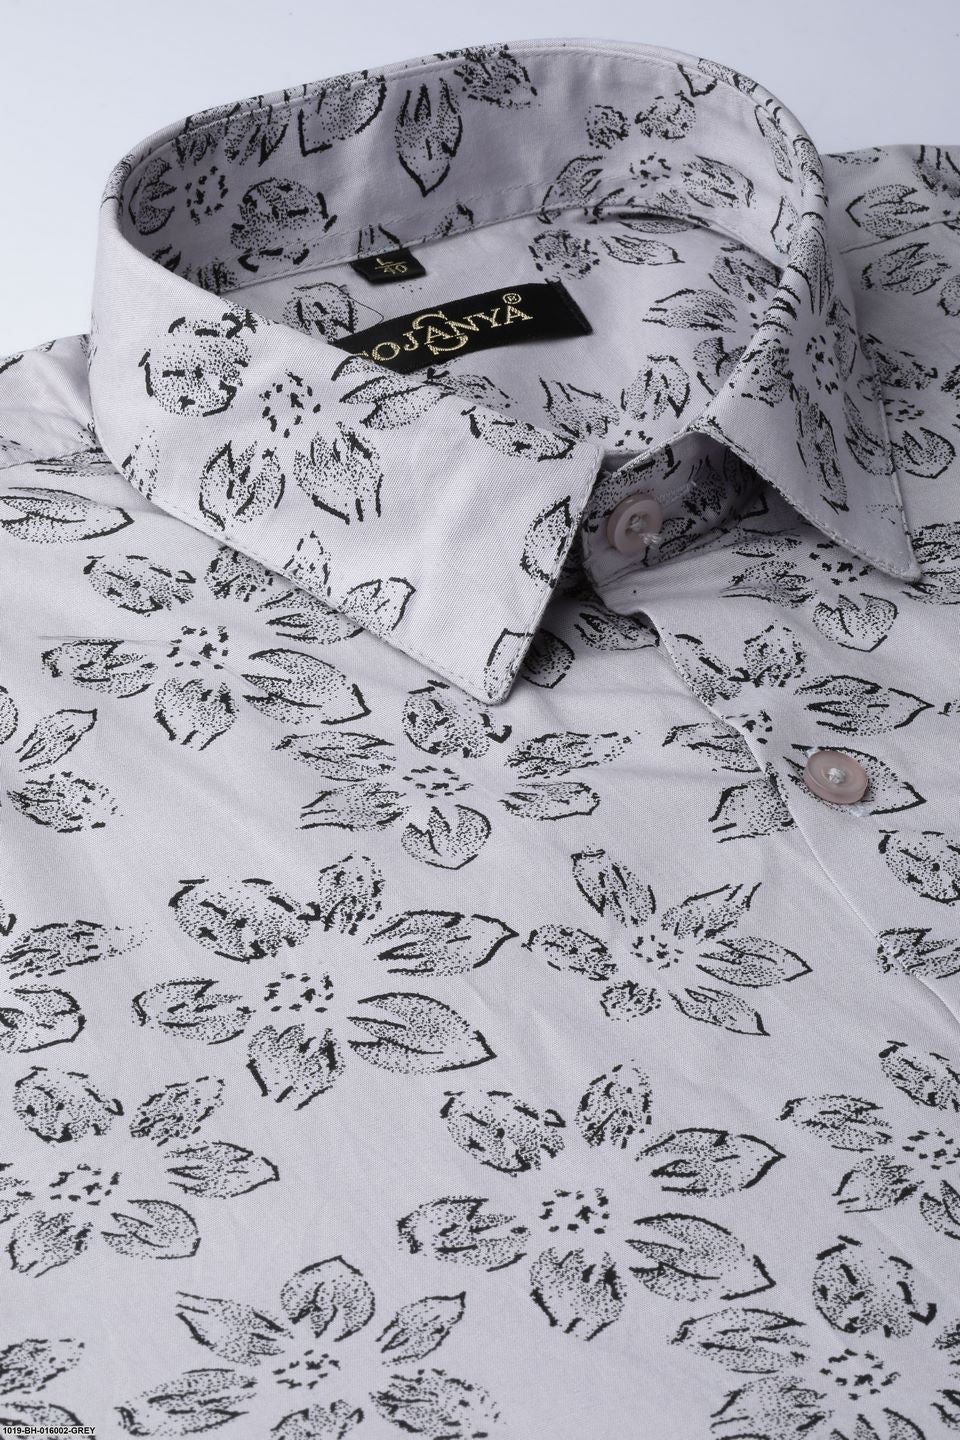 Men's Cotton Grey & Black Printed Formal Shirt - Sojanya